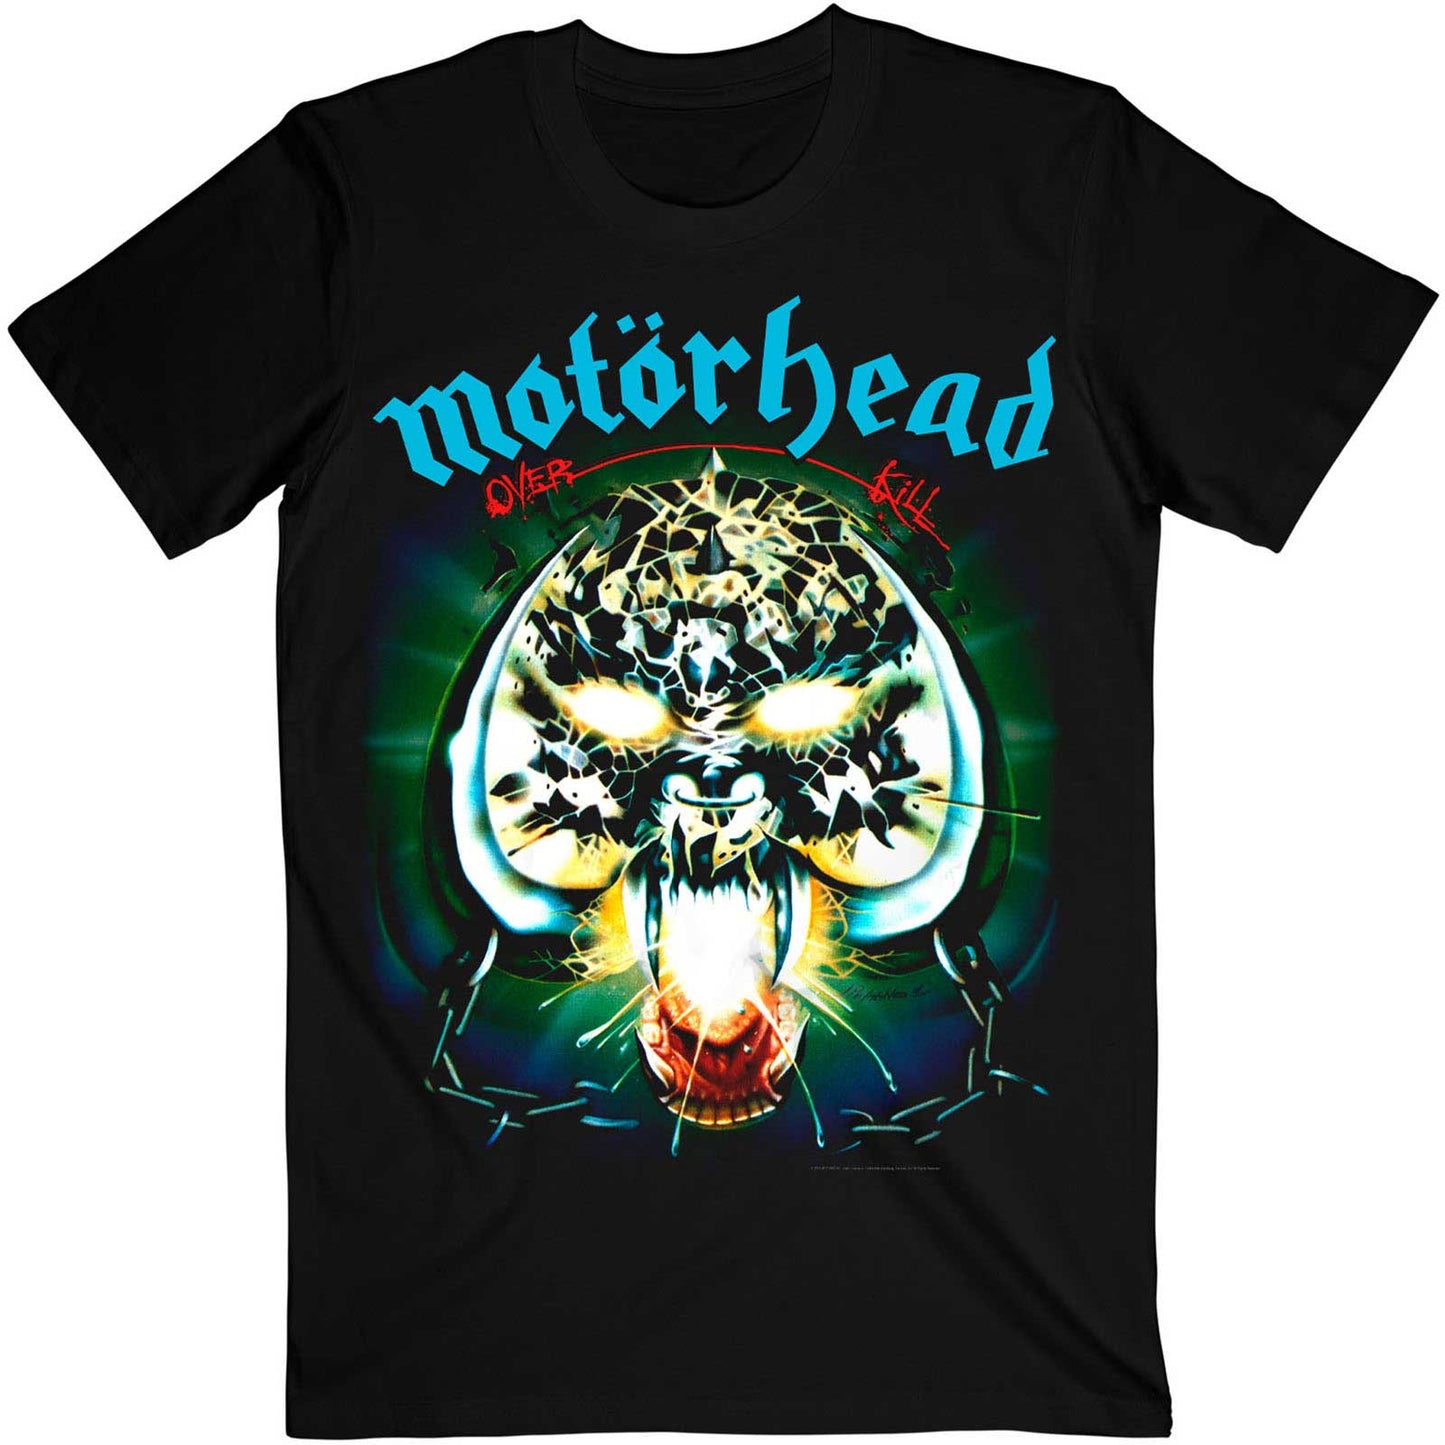 Motorhead T-Shirt - Overkill Single Cover (Unisex)